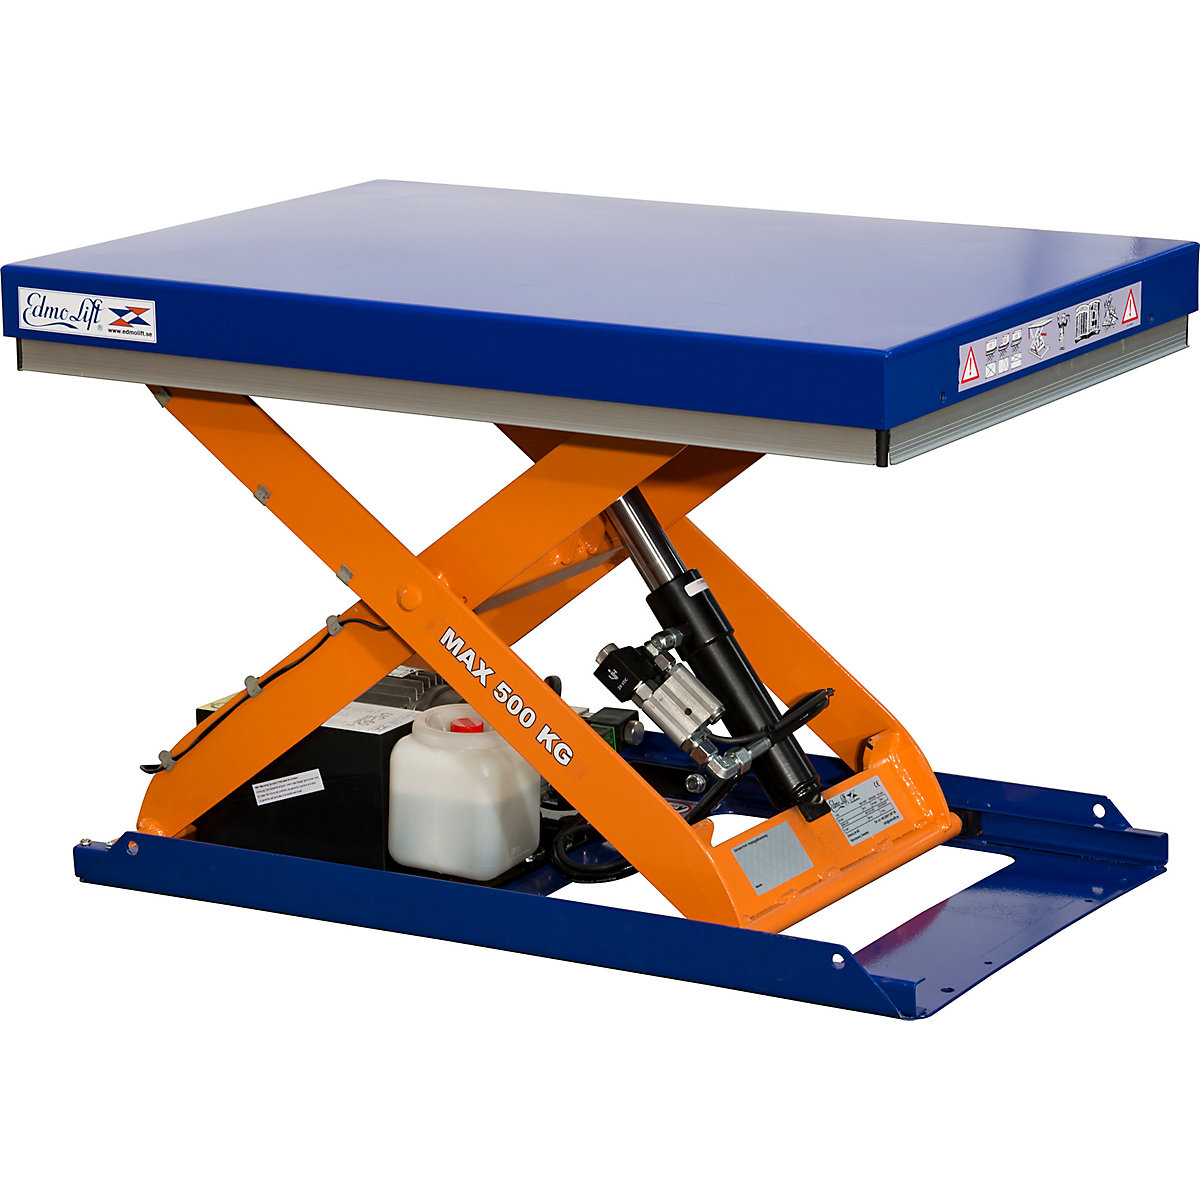 Compact lift table, static – Edmolift, max. load 500 kg, platform LxW 900 x 600 mm, effective lift 600 mm